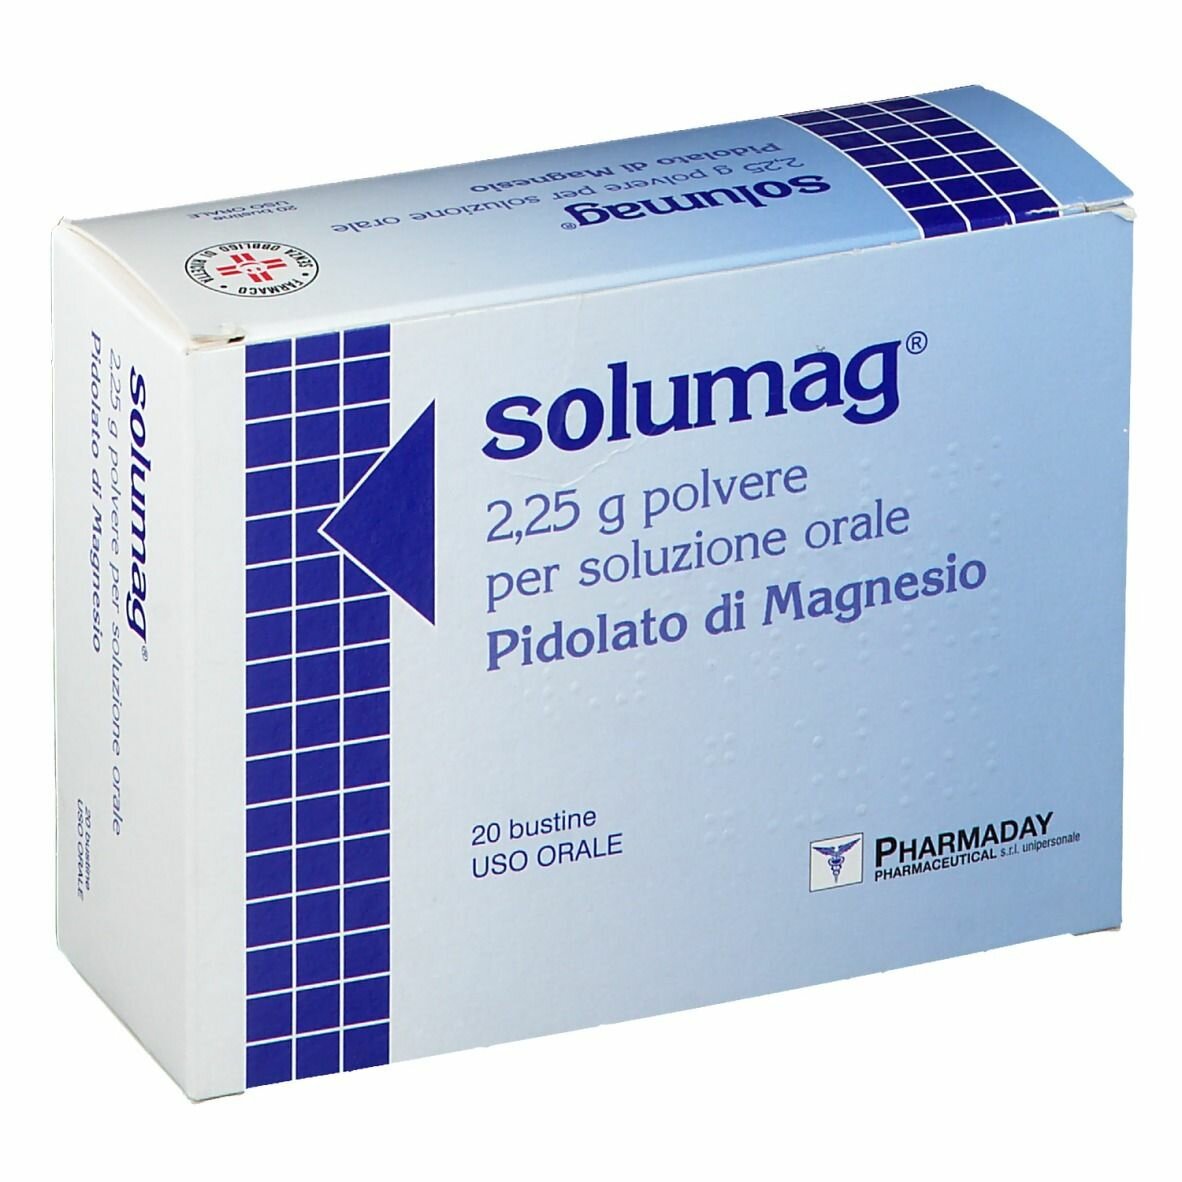 Solumag magnesio pidolato polvere orale 2,25 g 20 bustine img